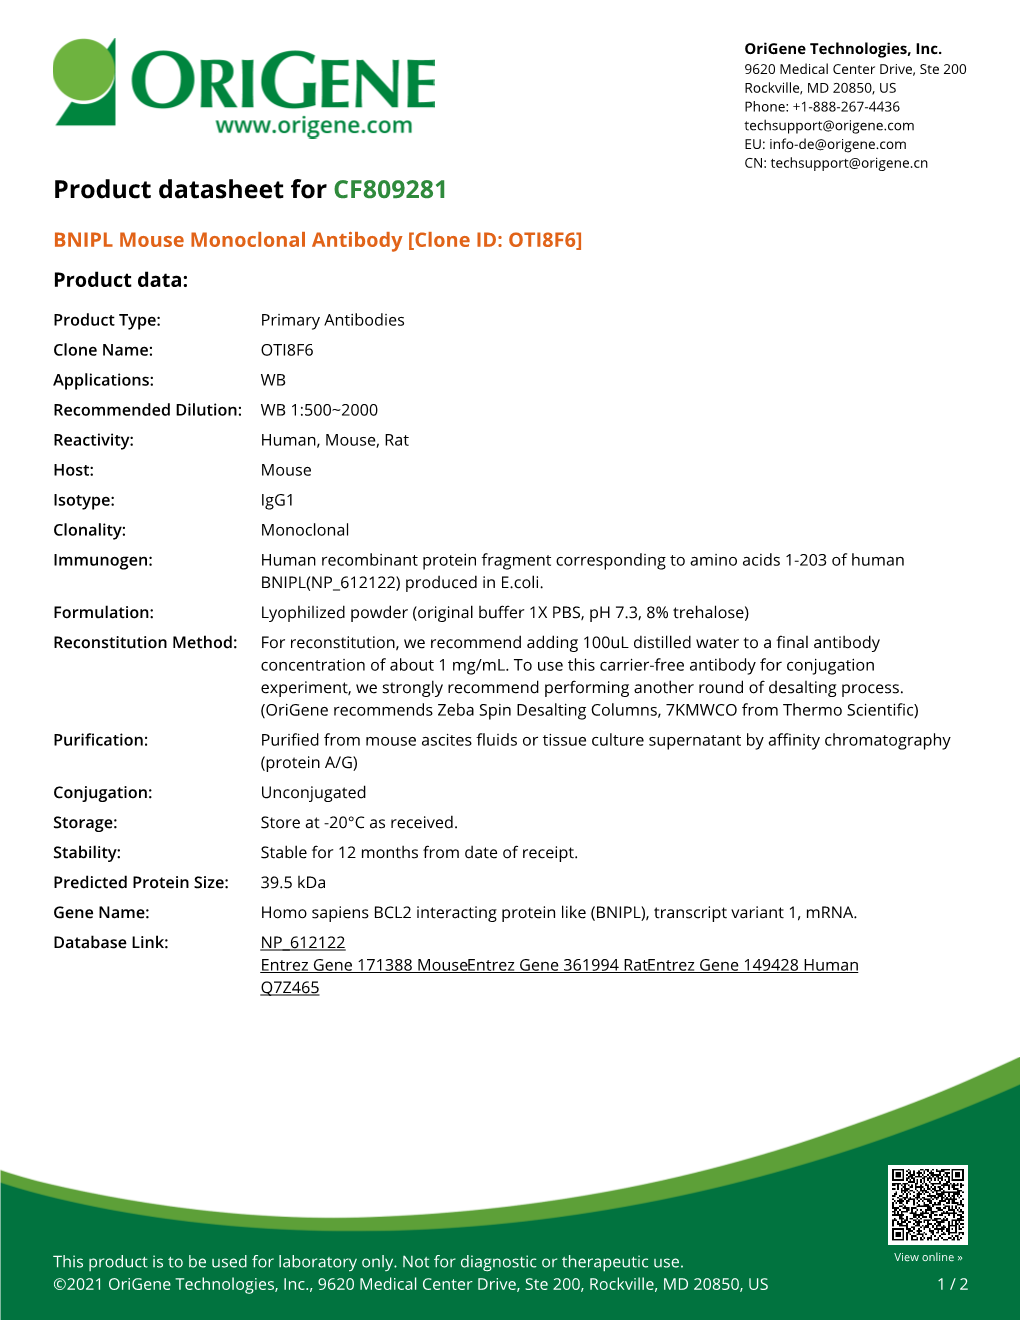 BNIPL Mouse Monoclonal Antibody [Clone ID: OTI8F6] Product Data